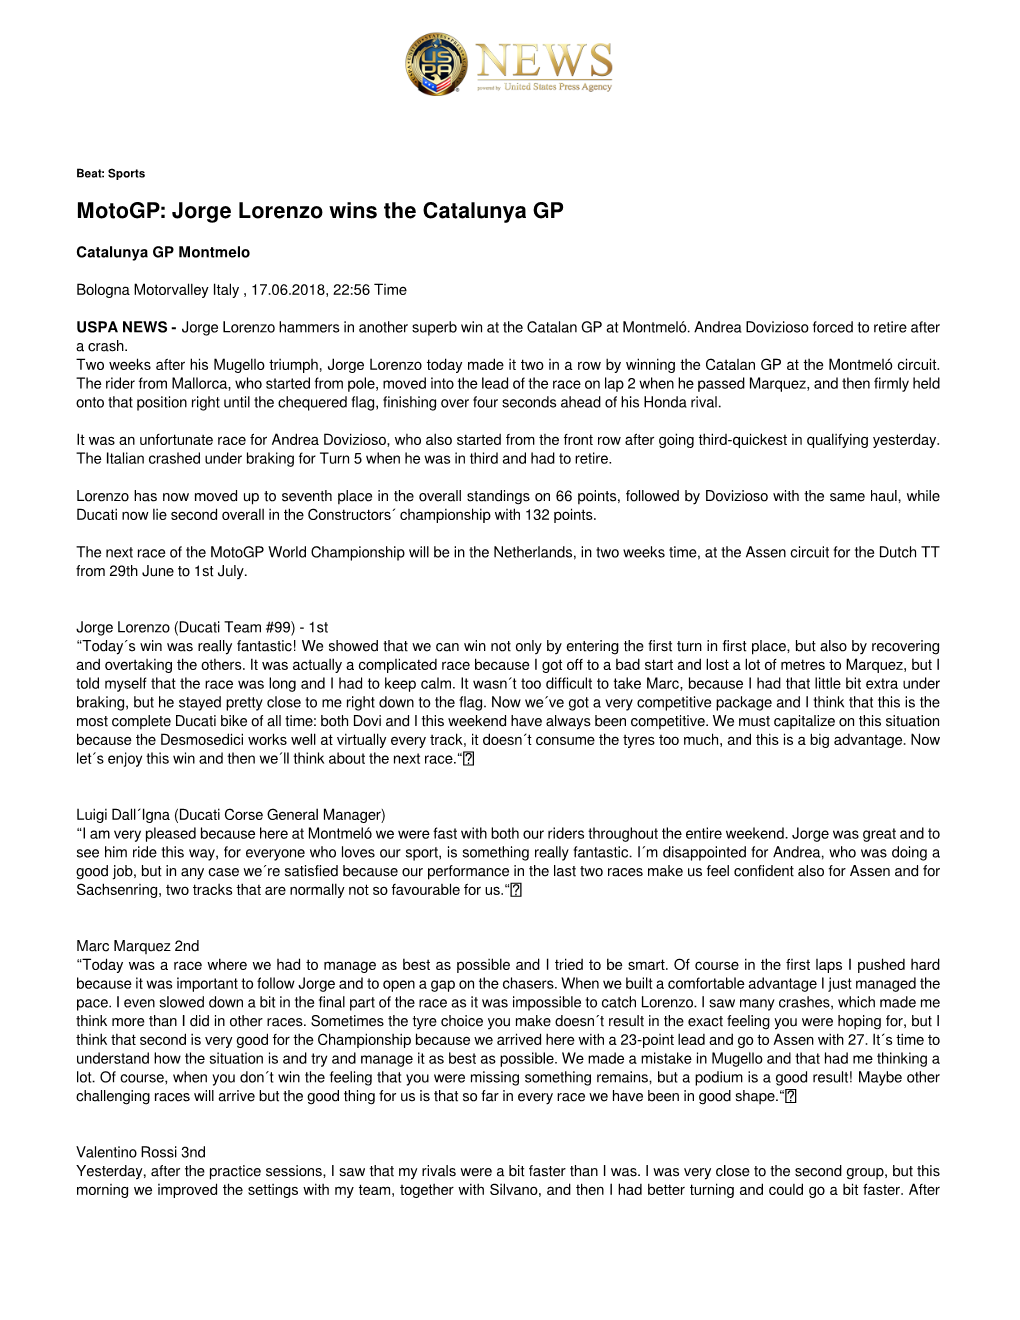 Motogp: Jorge Lorenzo Wins the Catalunya GP